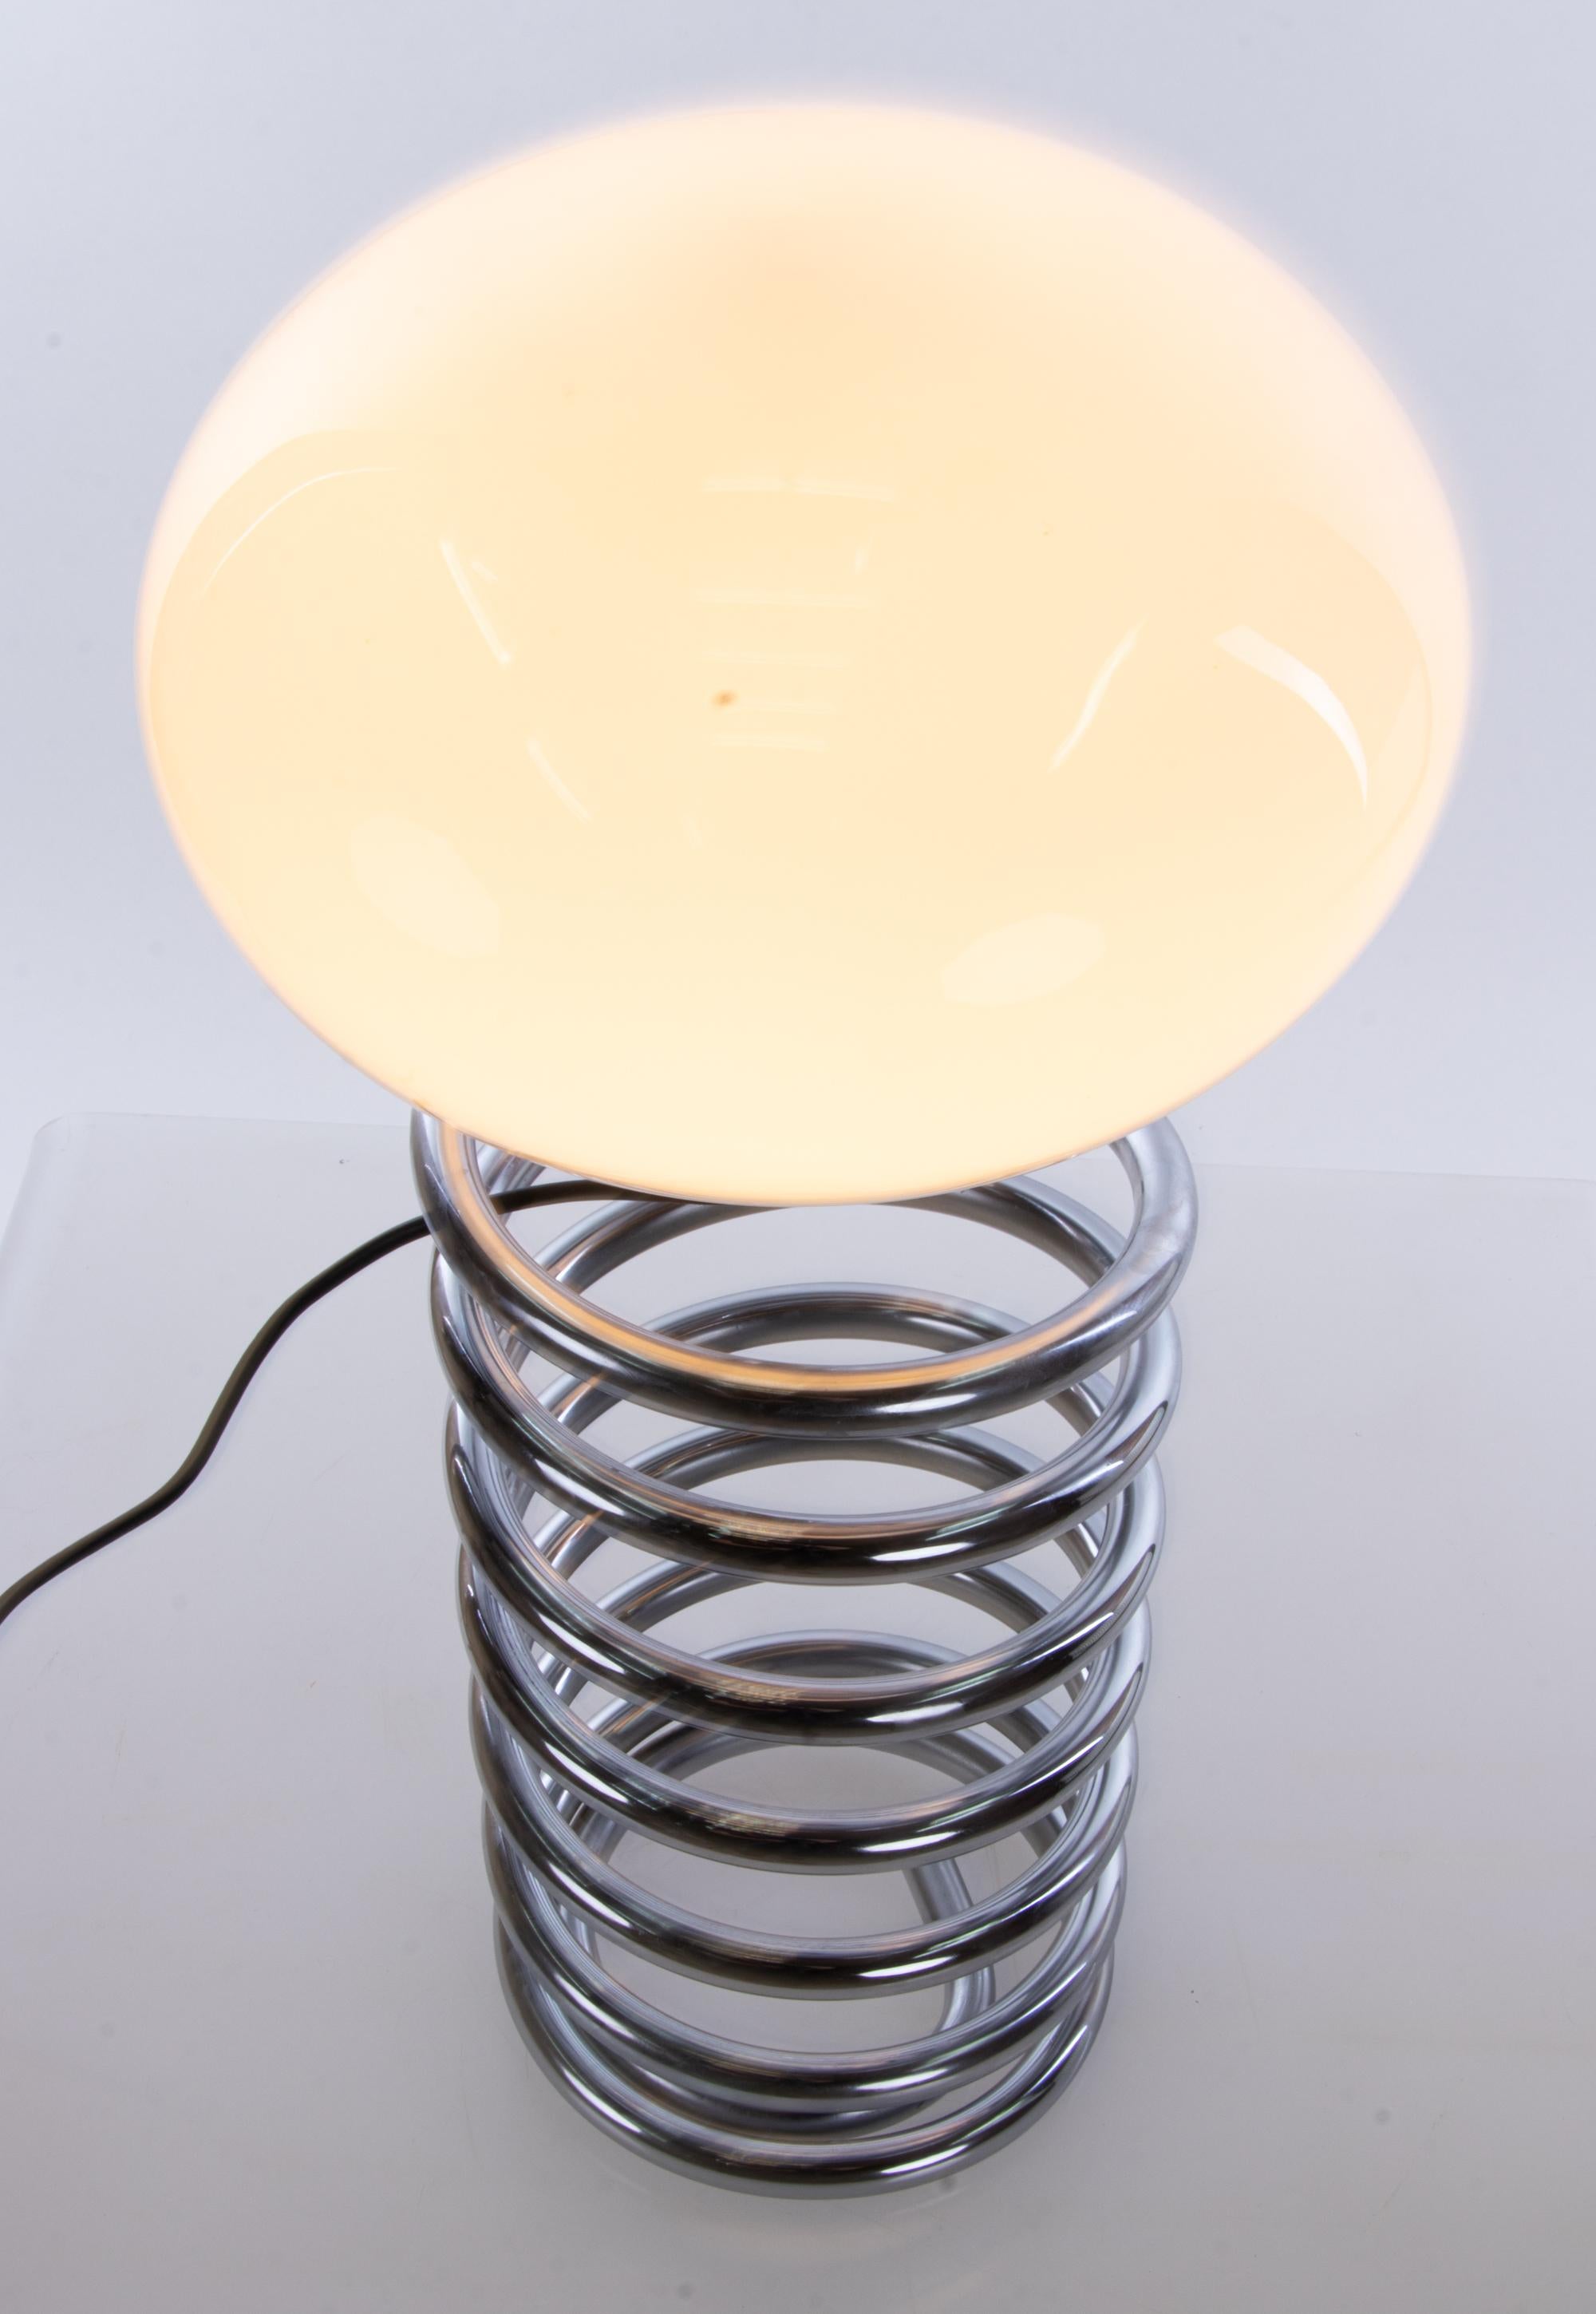 Large design desk light with a white glass shade on a chromed spiral steel base. Designed 1965 by Ingo Maurer for Design M, Germany. 

Design: Ingo Maurer. 
Model: Spiral, Spirale. 
Manufacturer: Design M. 
Measures: height 23.6